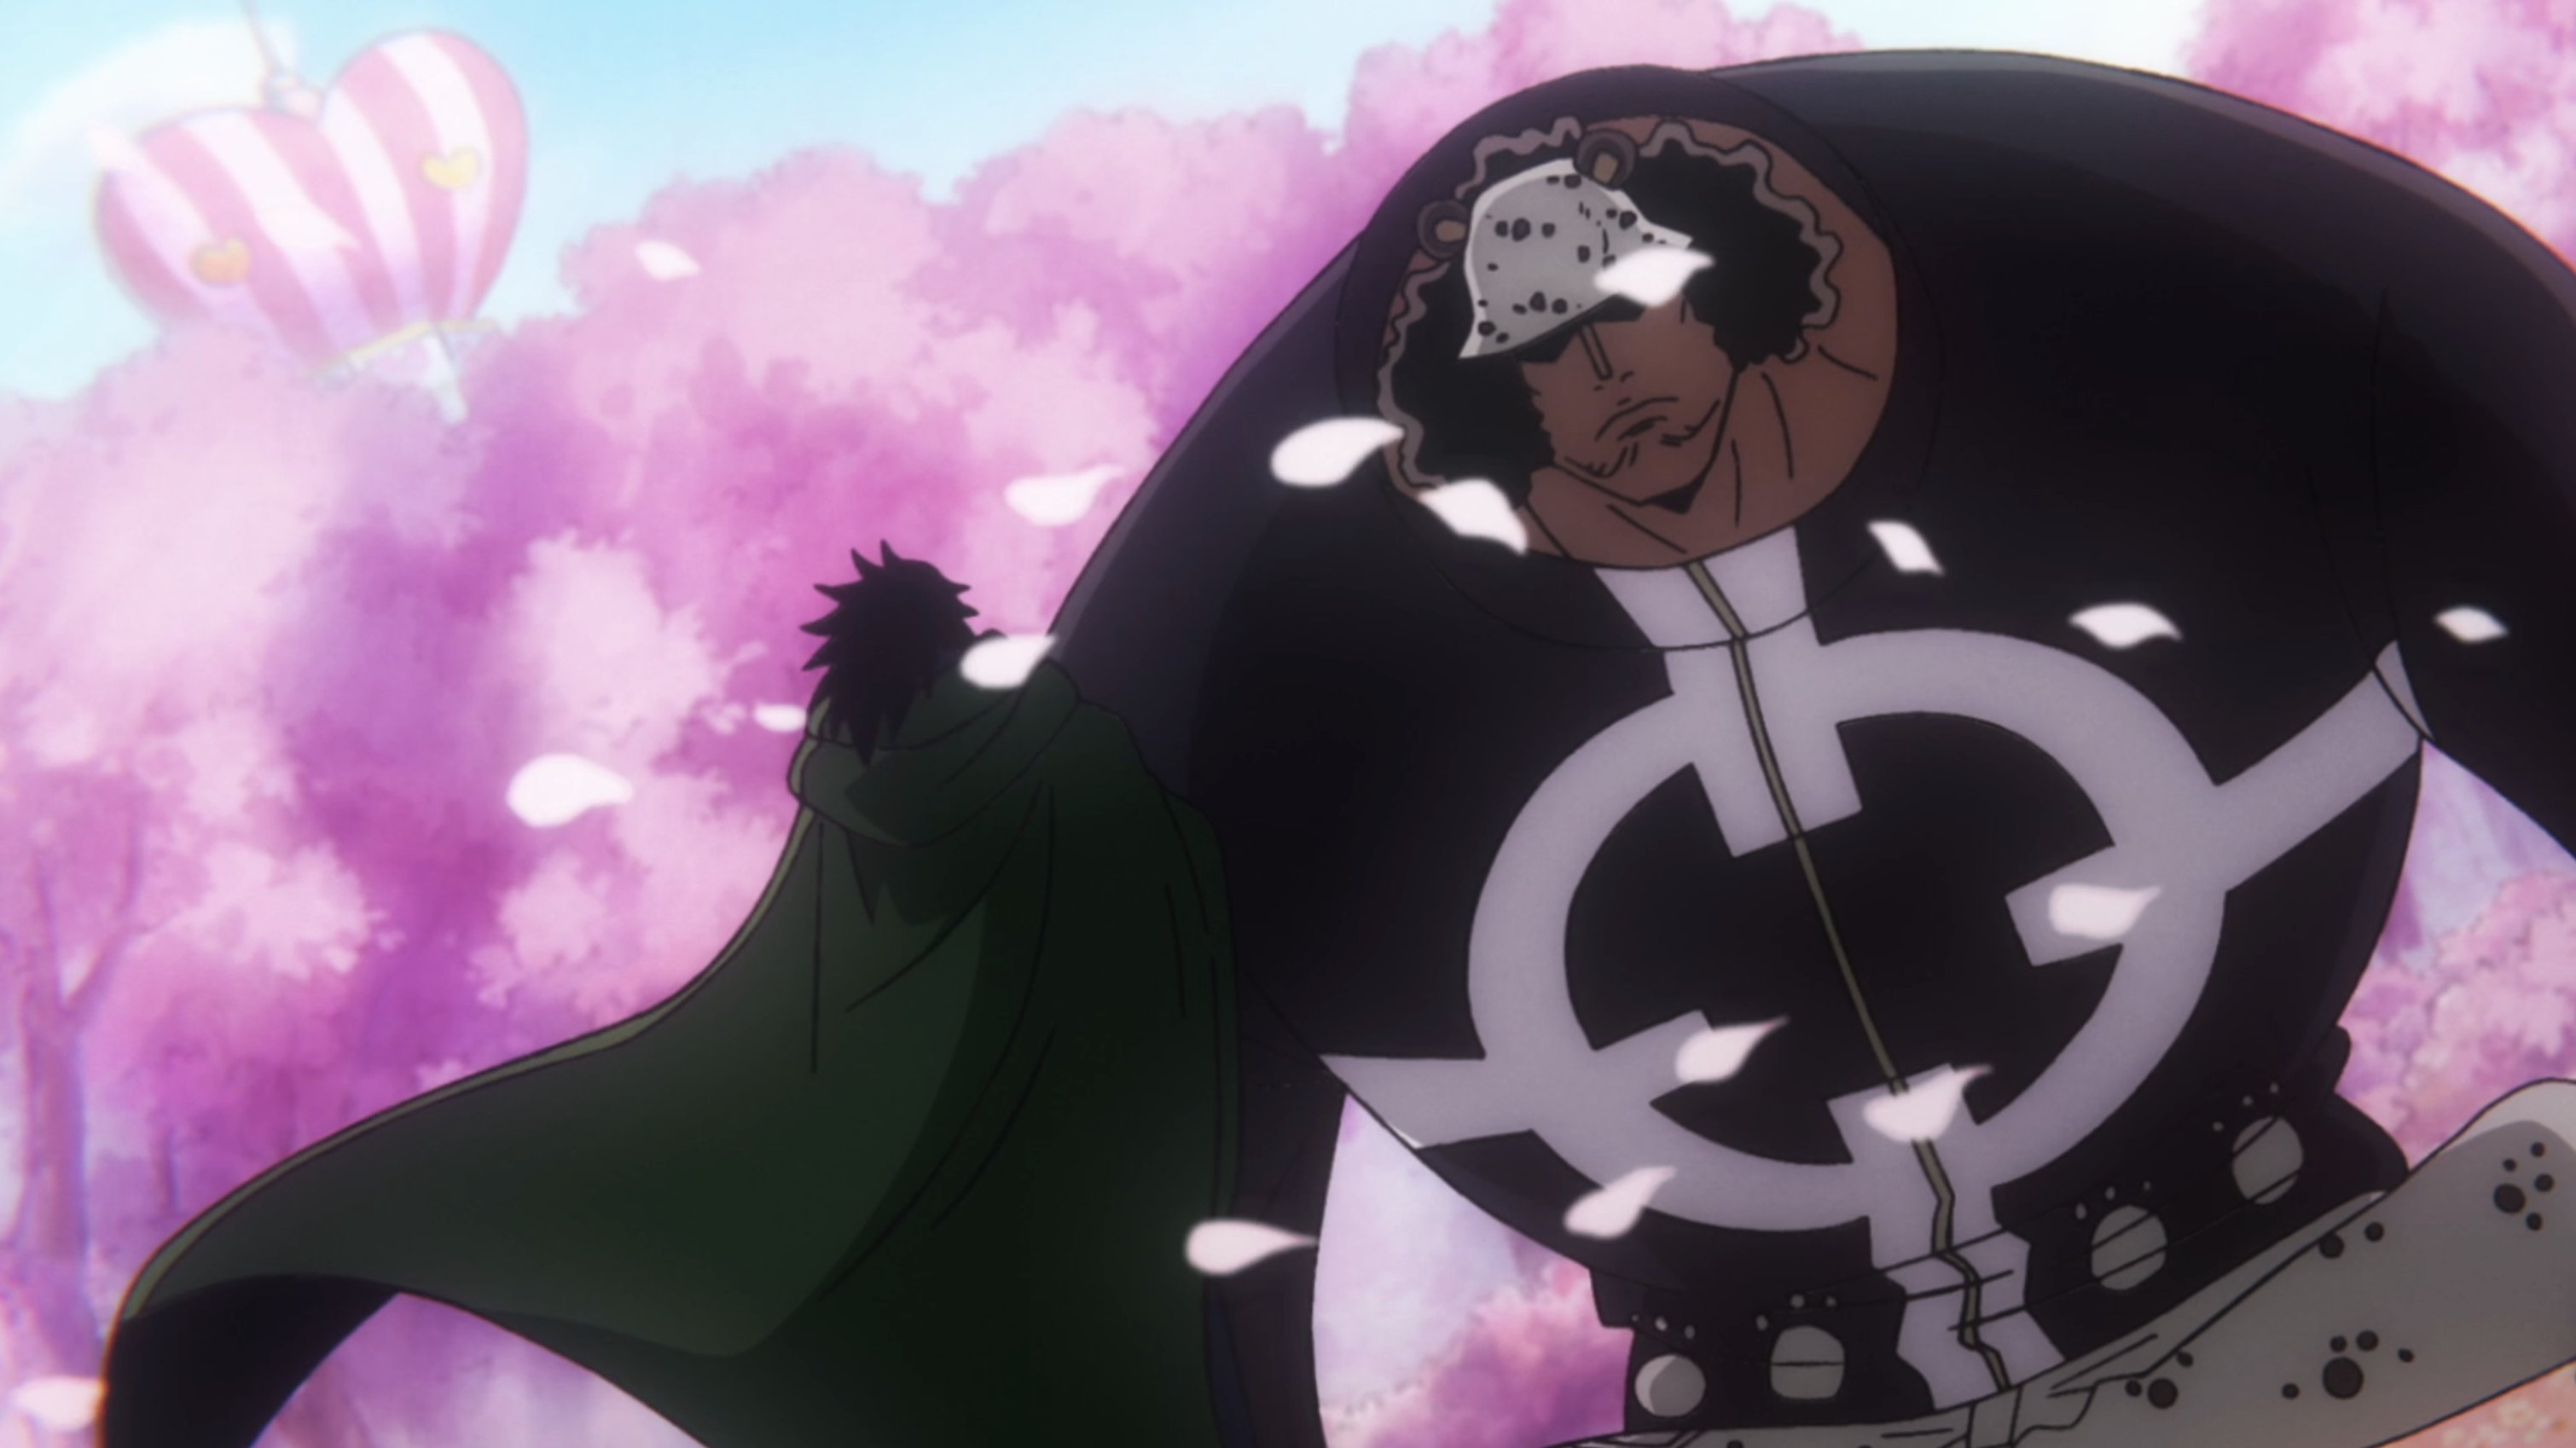 One Piece Episode 1026 preview clip